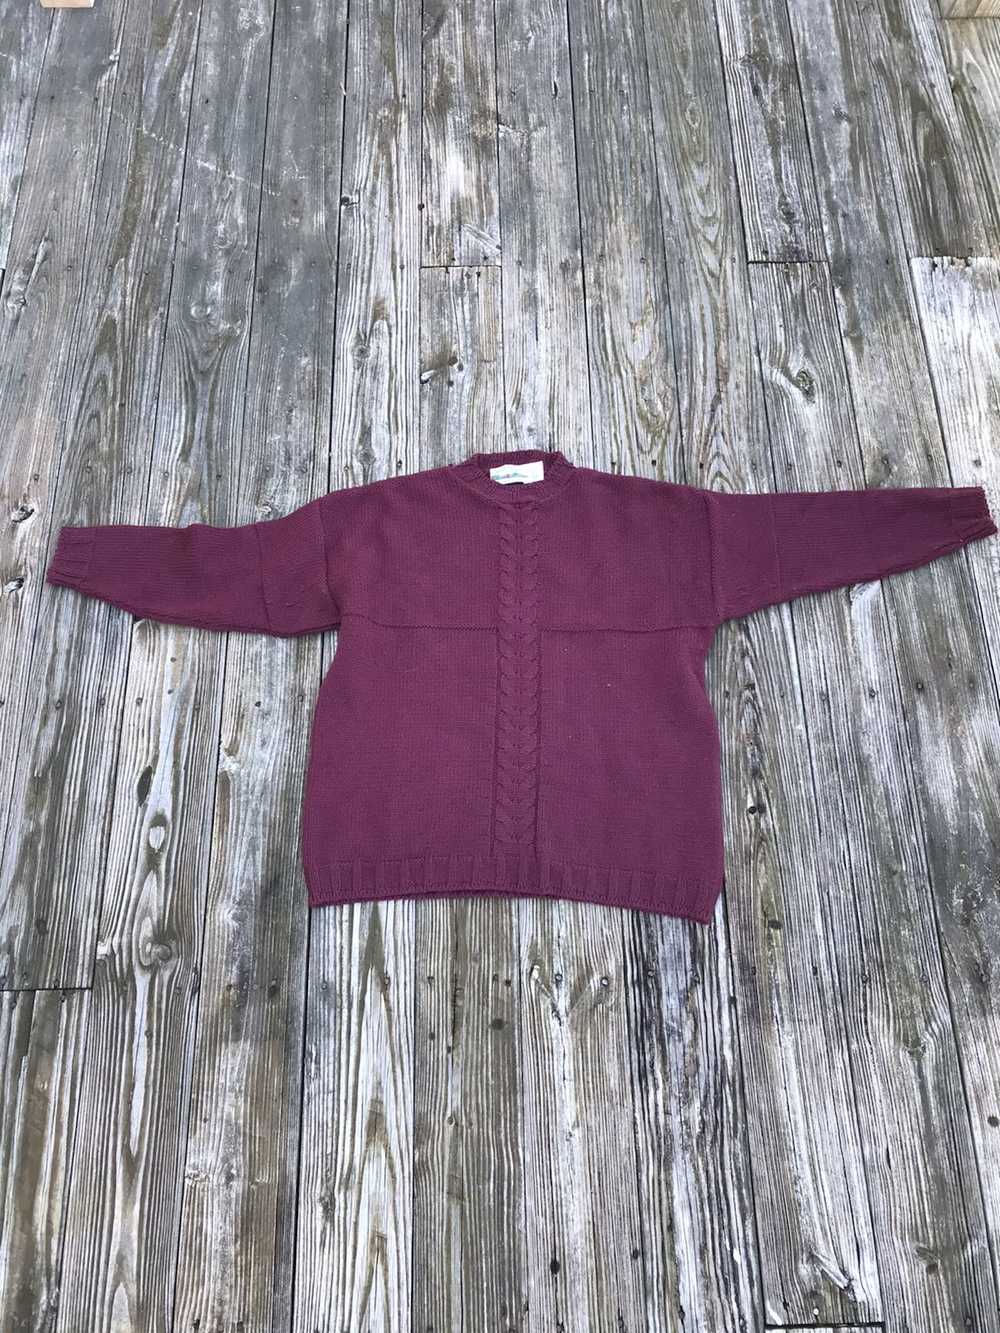 Aran Crafts × Vintage Maroon Crewneck Sweater wit… - image 3